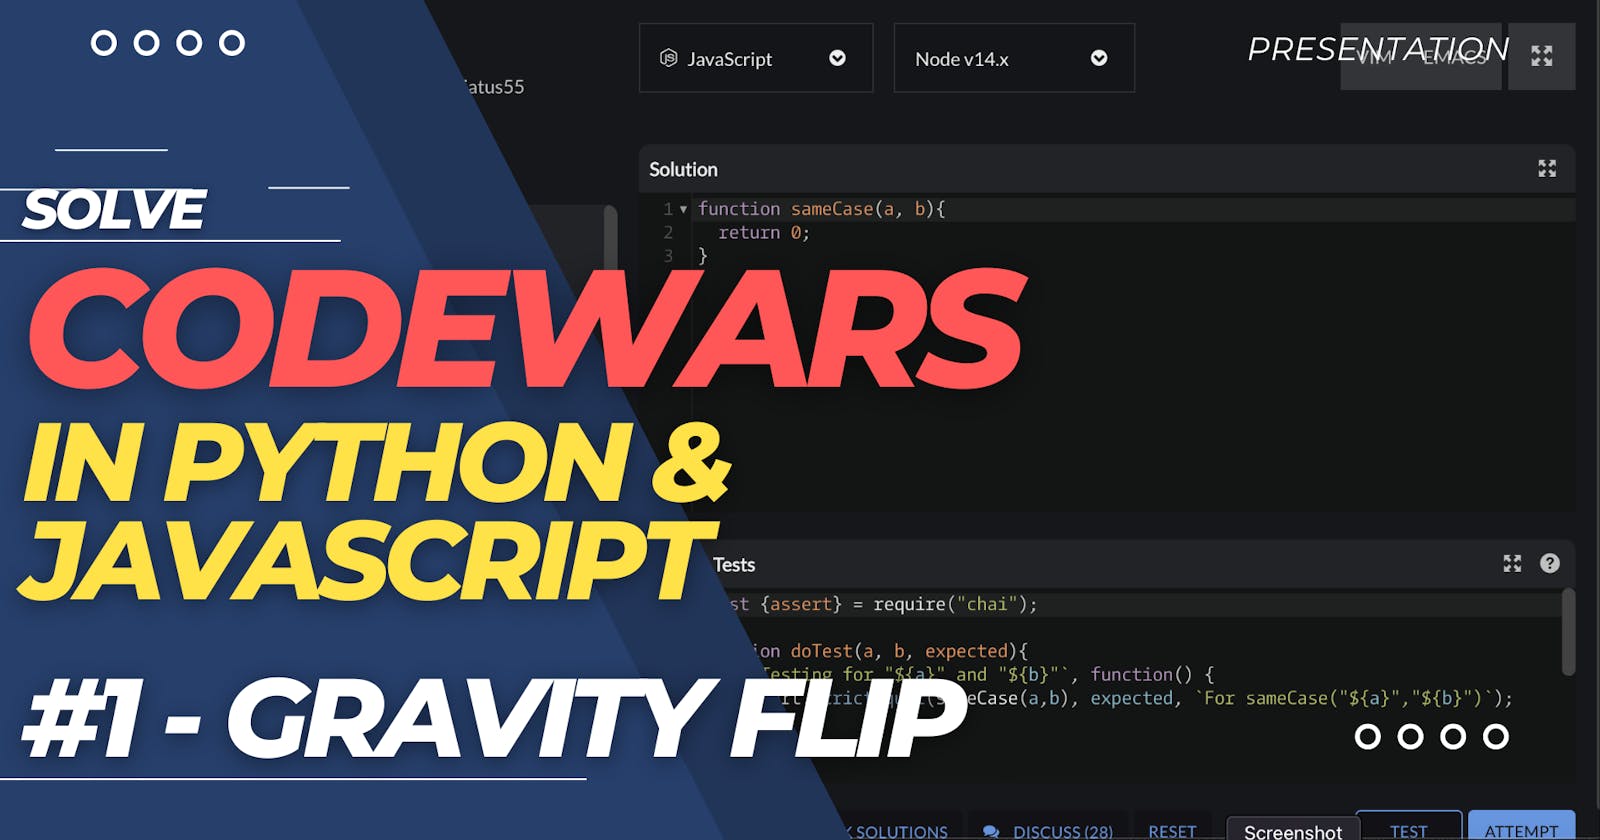 CODEWARS #1 - Gravity Flip (solved in Python & Javascript)